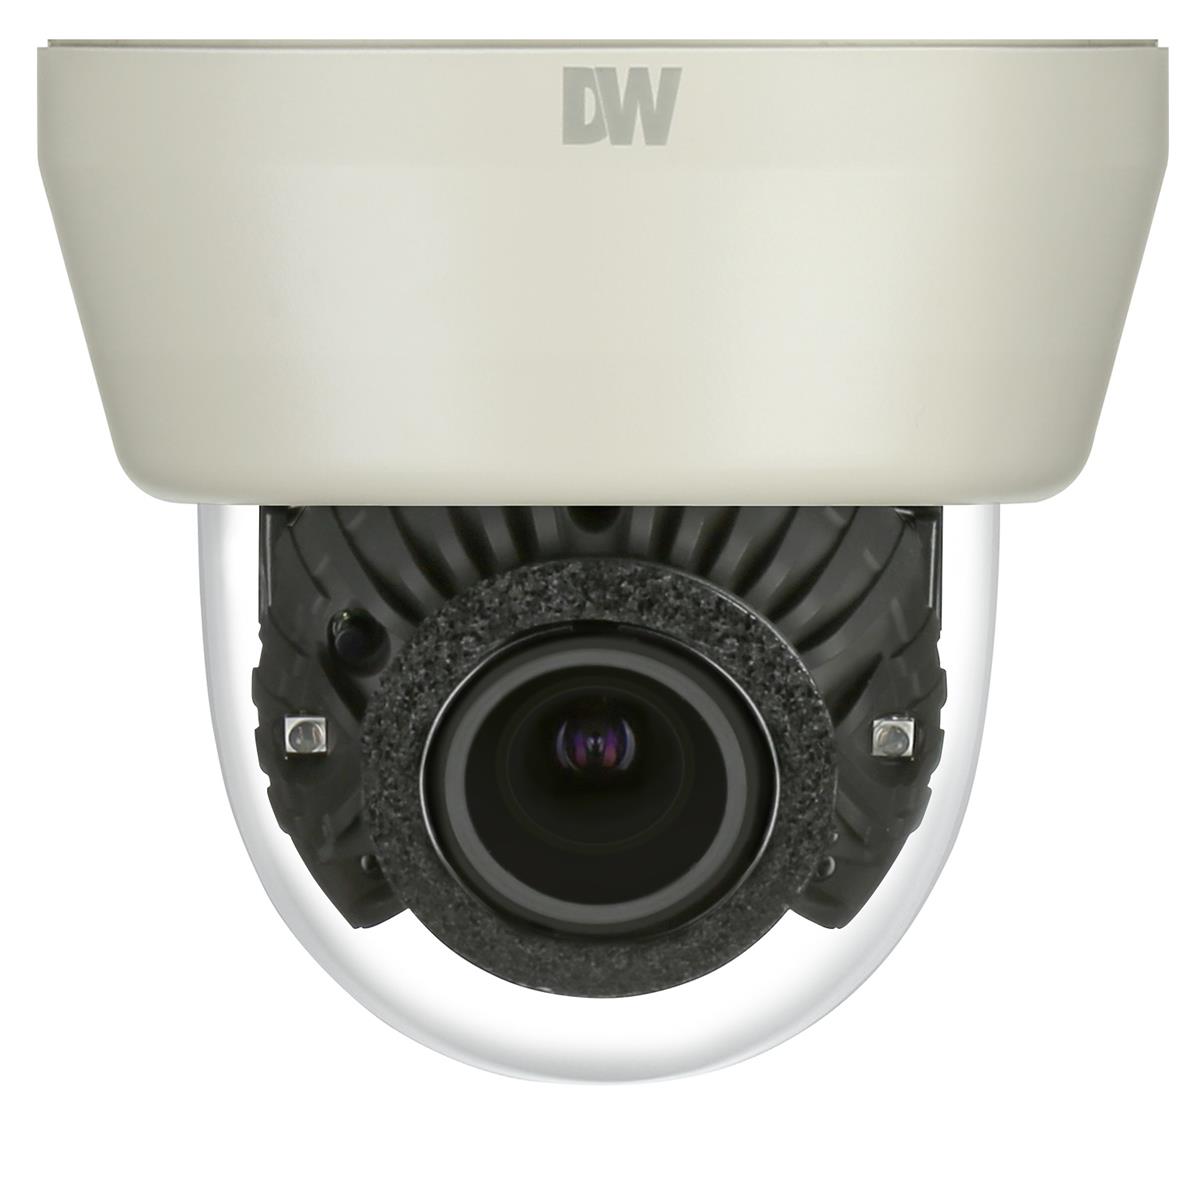 Image of Digital Watchdog DWC-D4283WTIR 2.1MP Analog Dome Camera